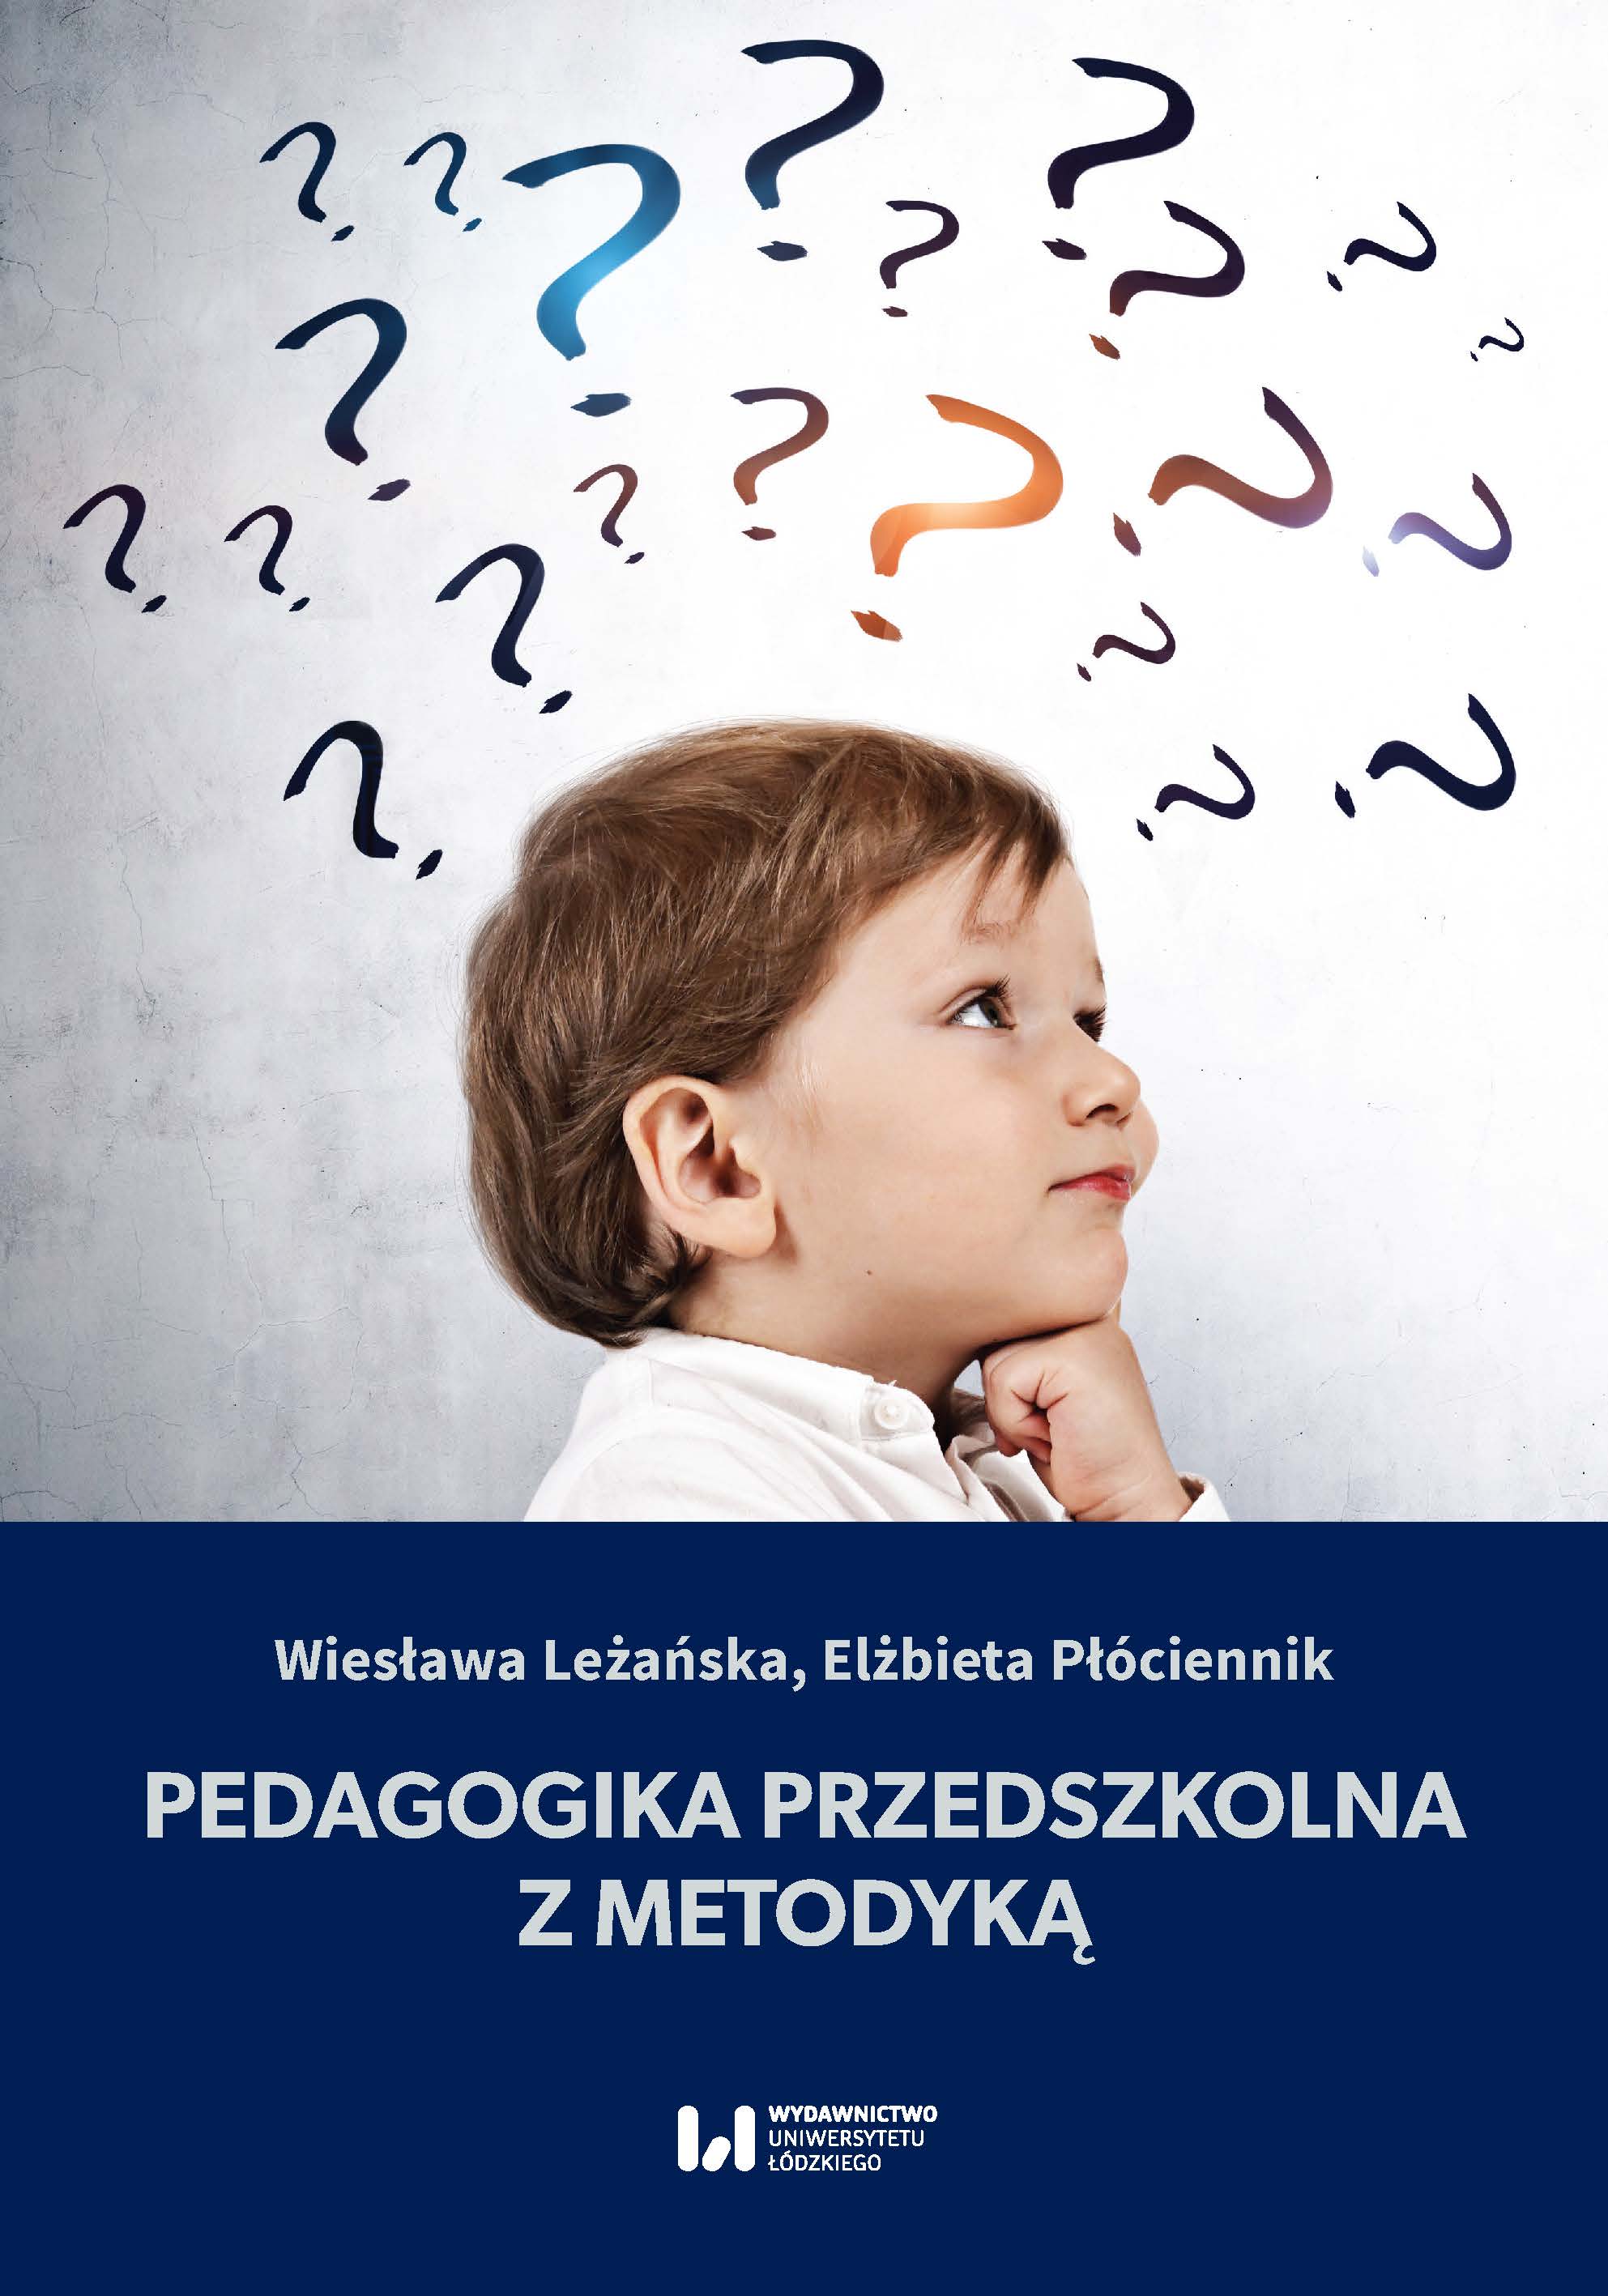 Pre-School Pedagogy with Methodology Cover Image